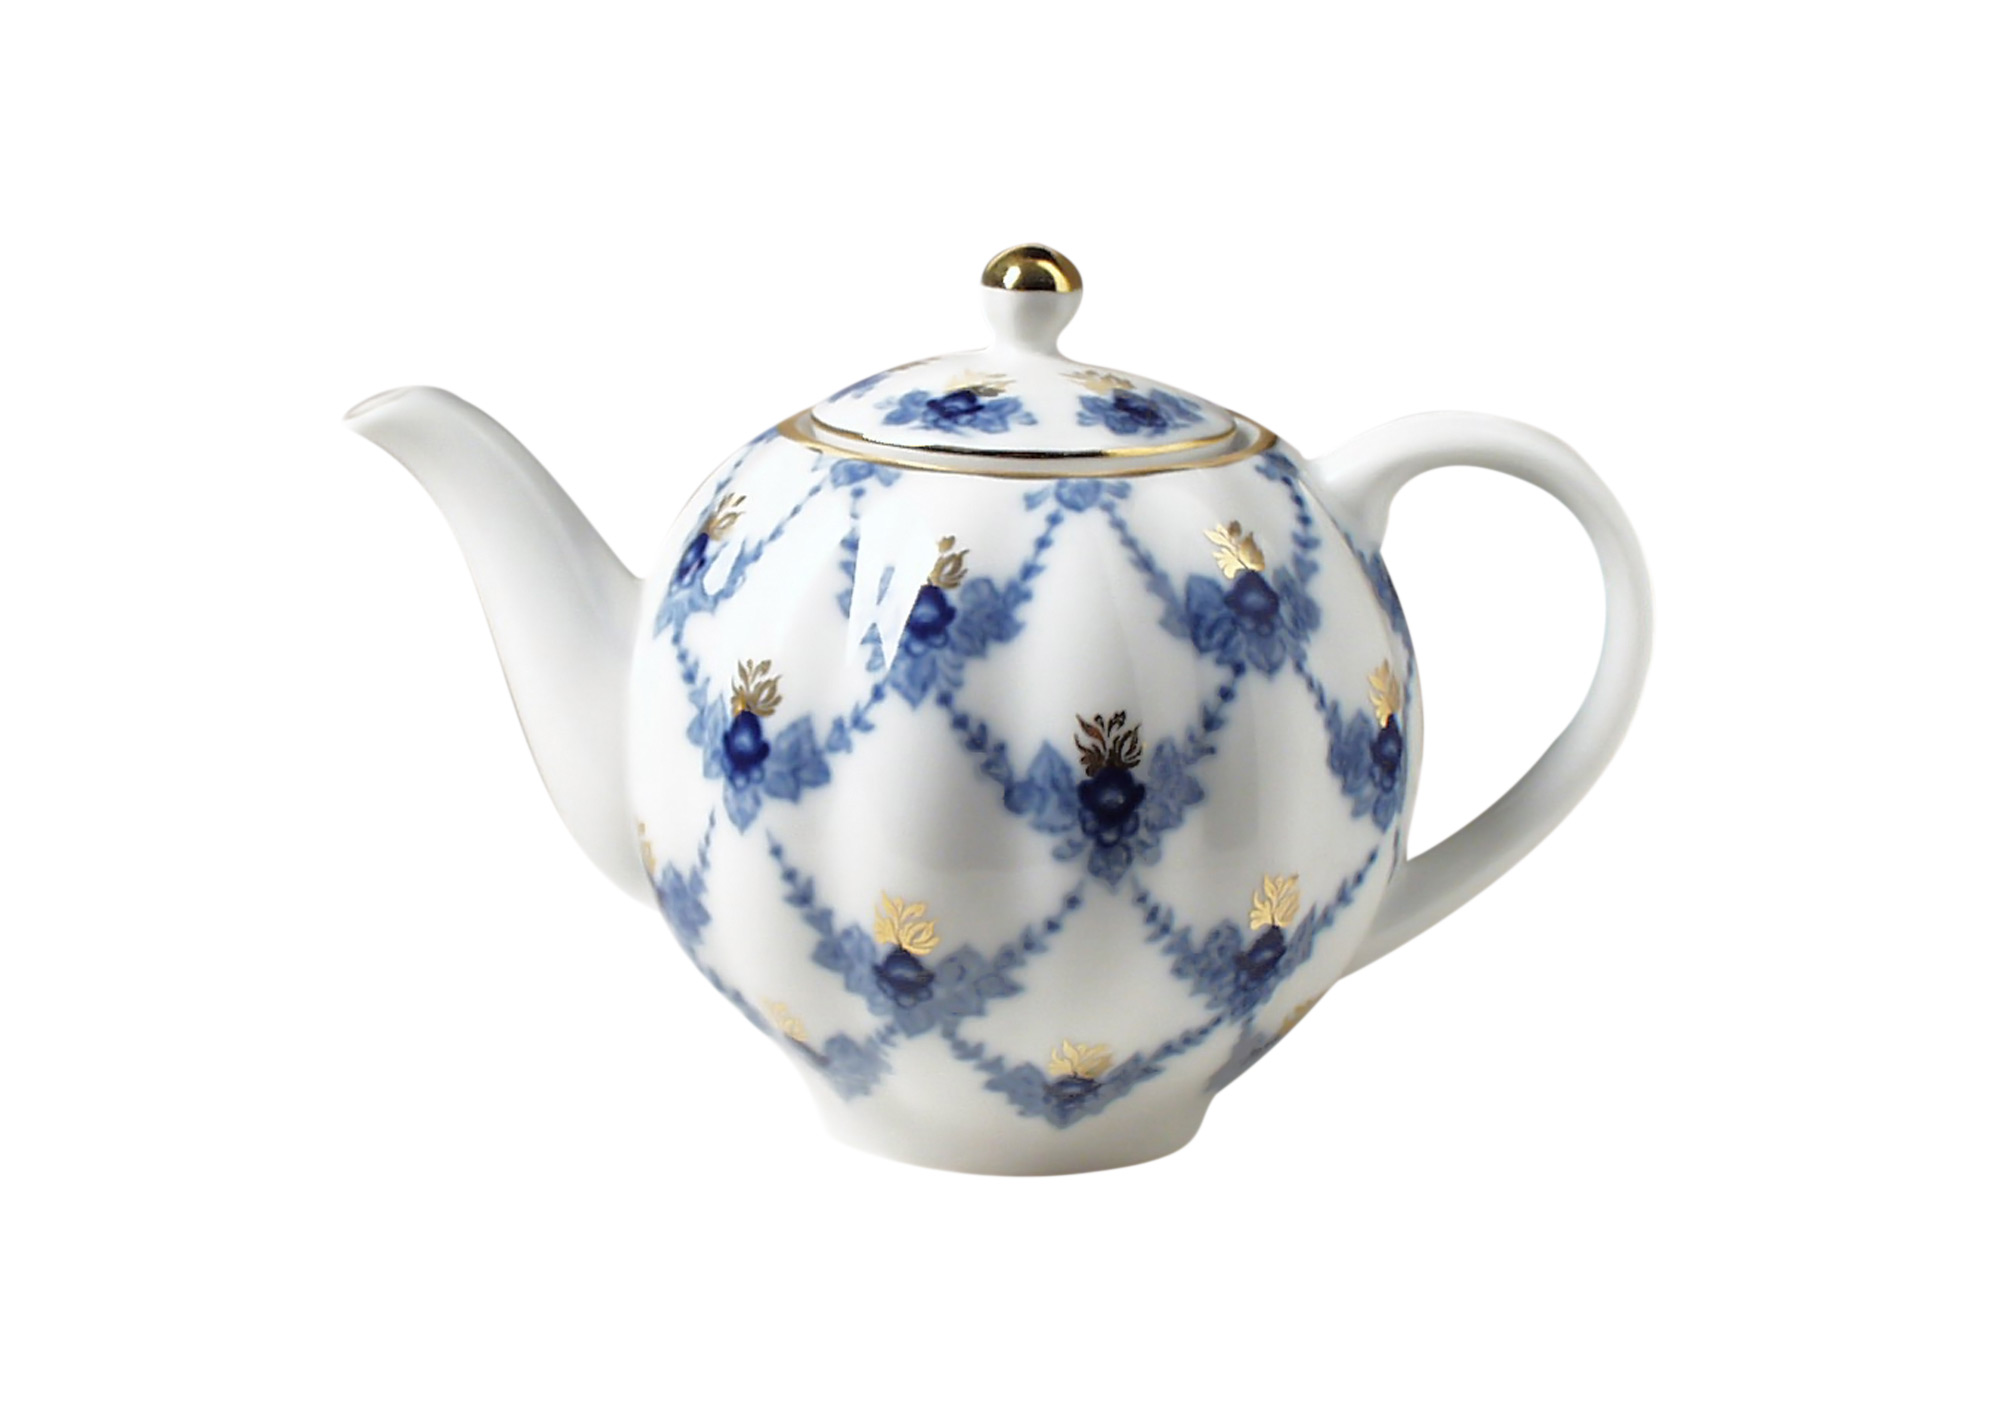 Buy Evening Time Teapot Small, 3 cup at GoldenCockerel.com